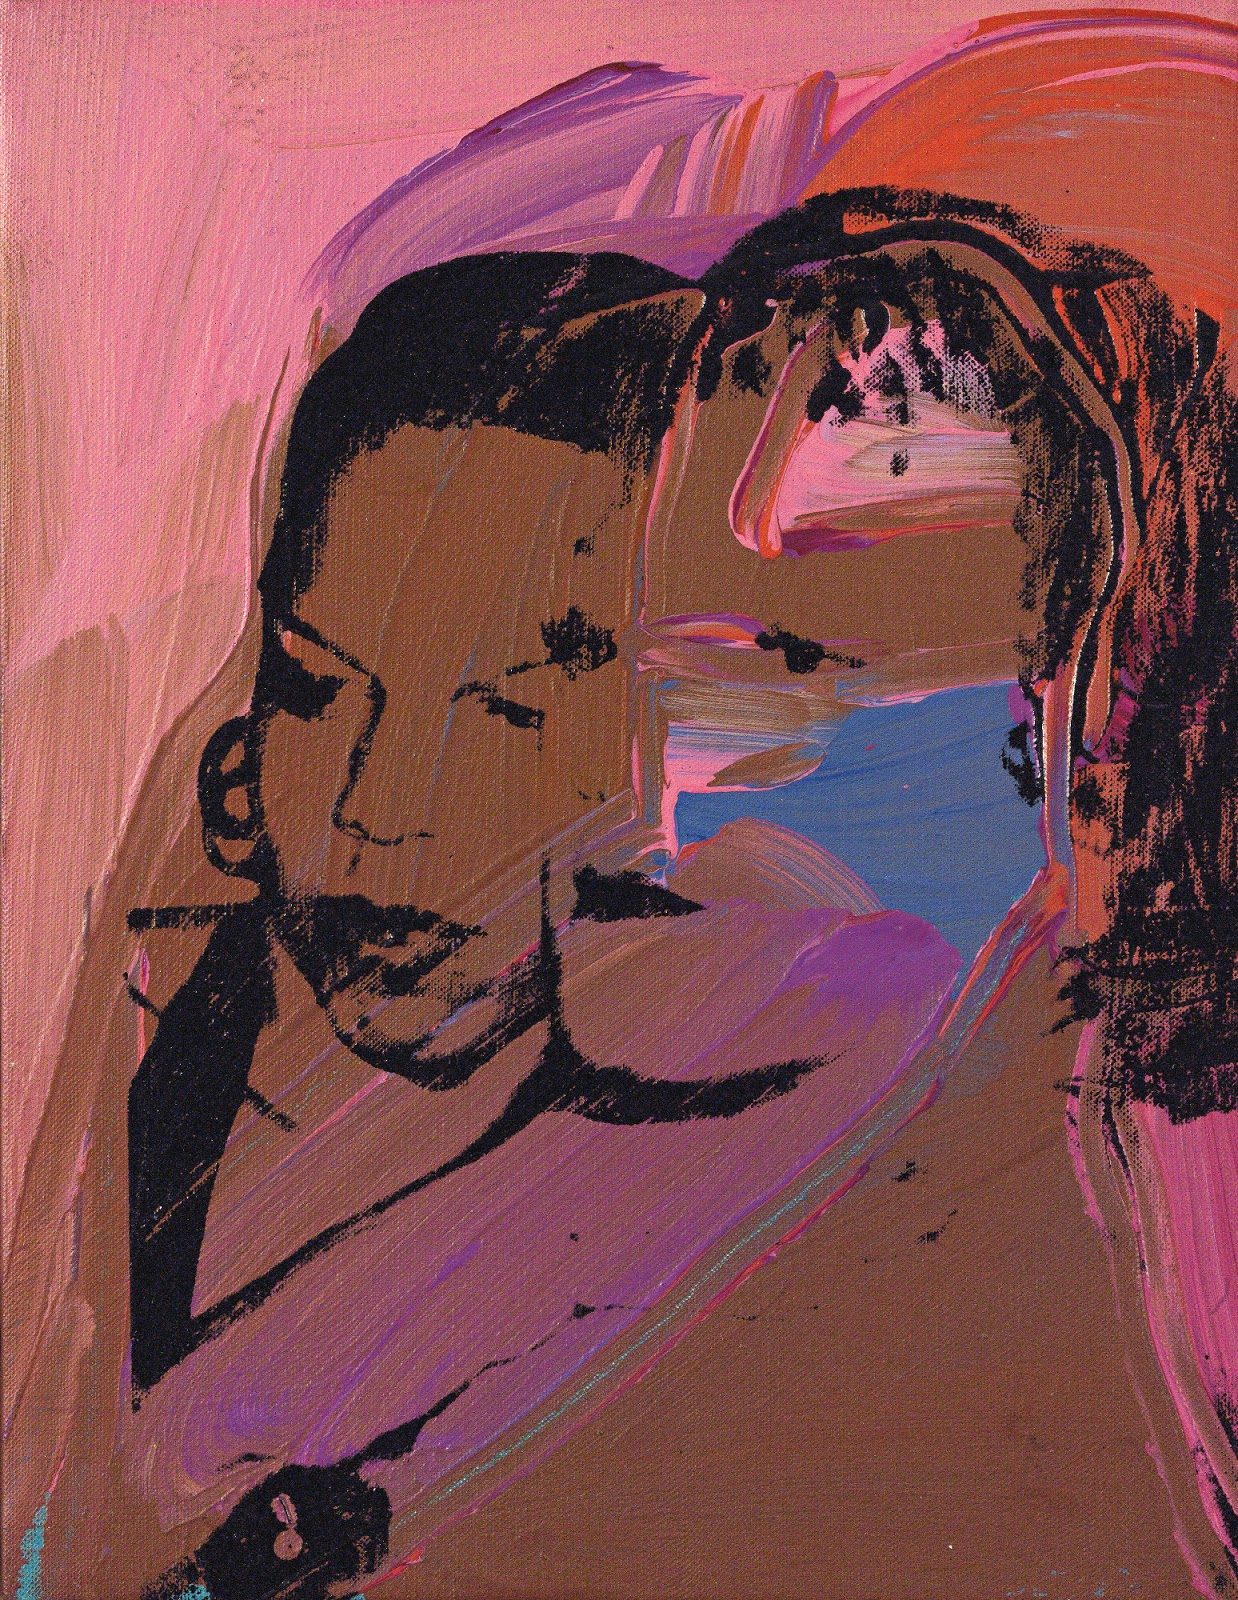 Andy+Warhol-1928-1987 (89).jpg